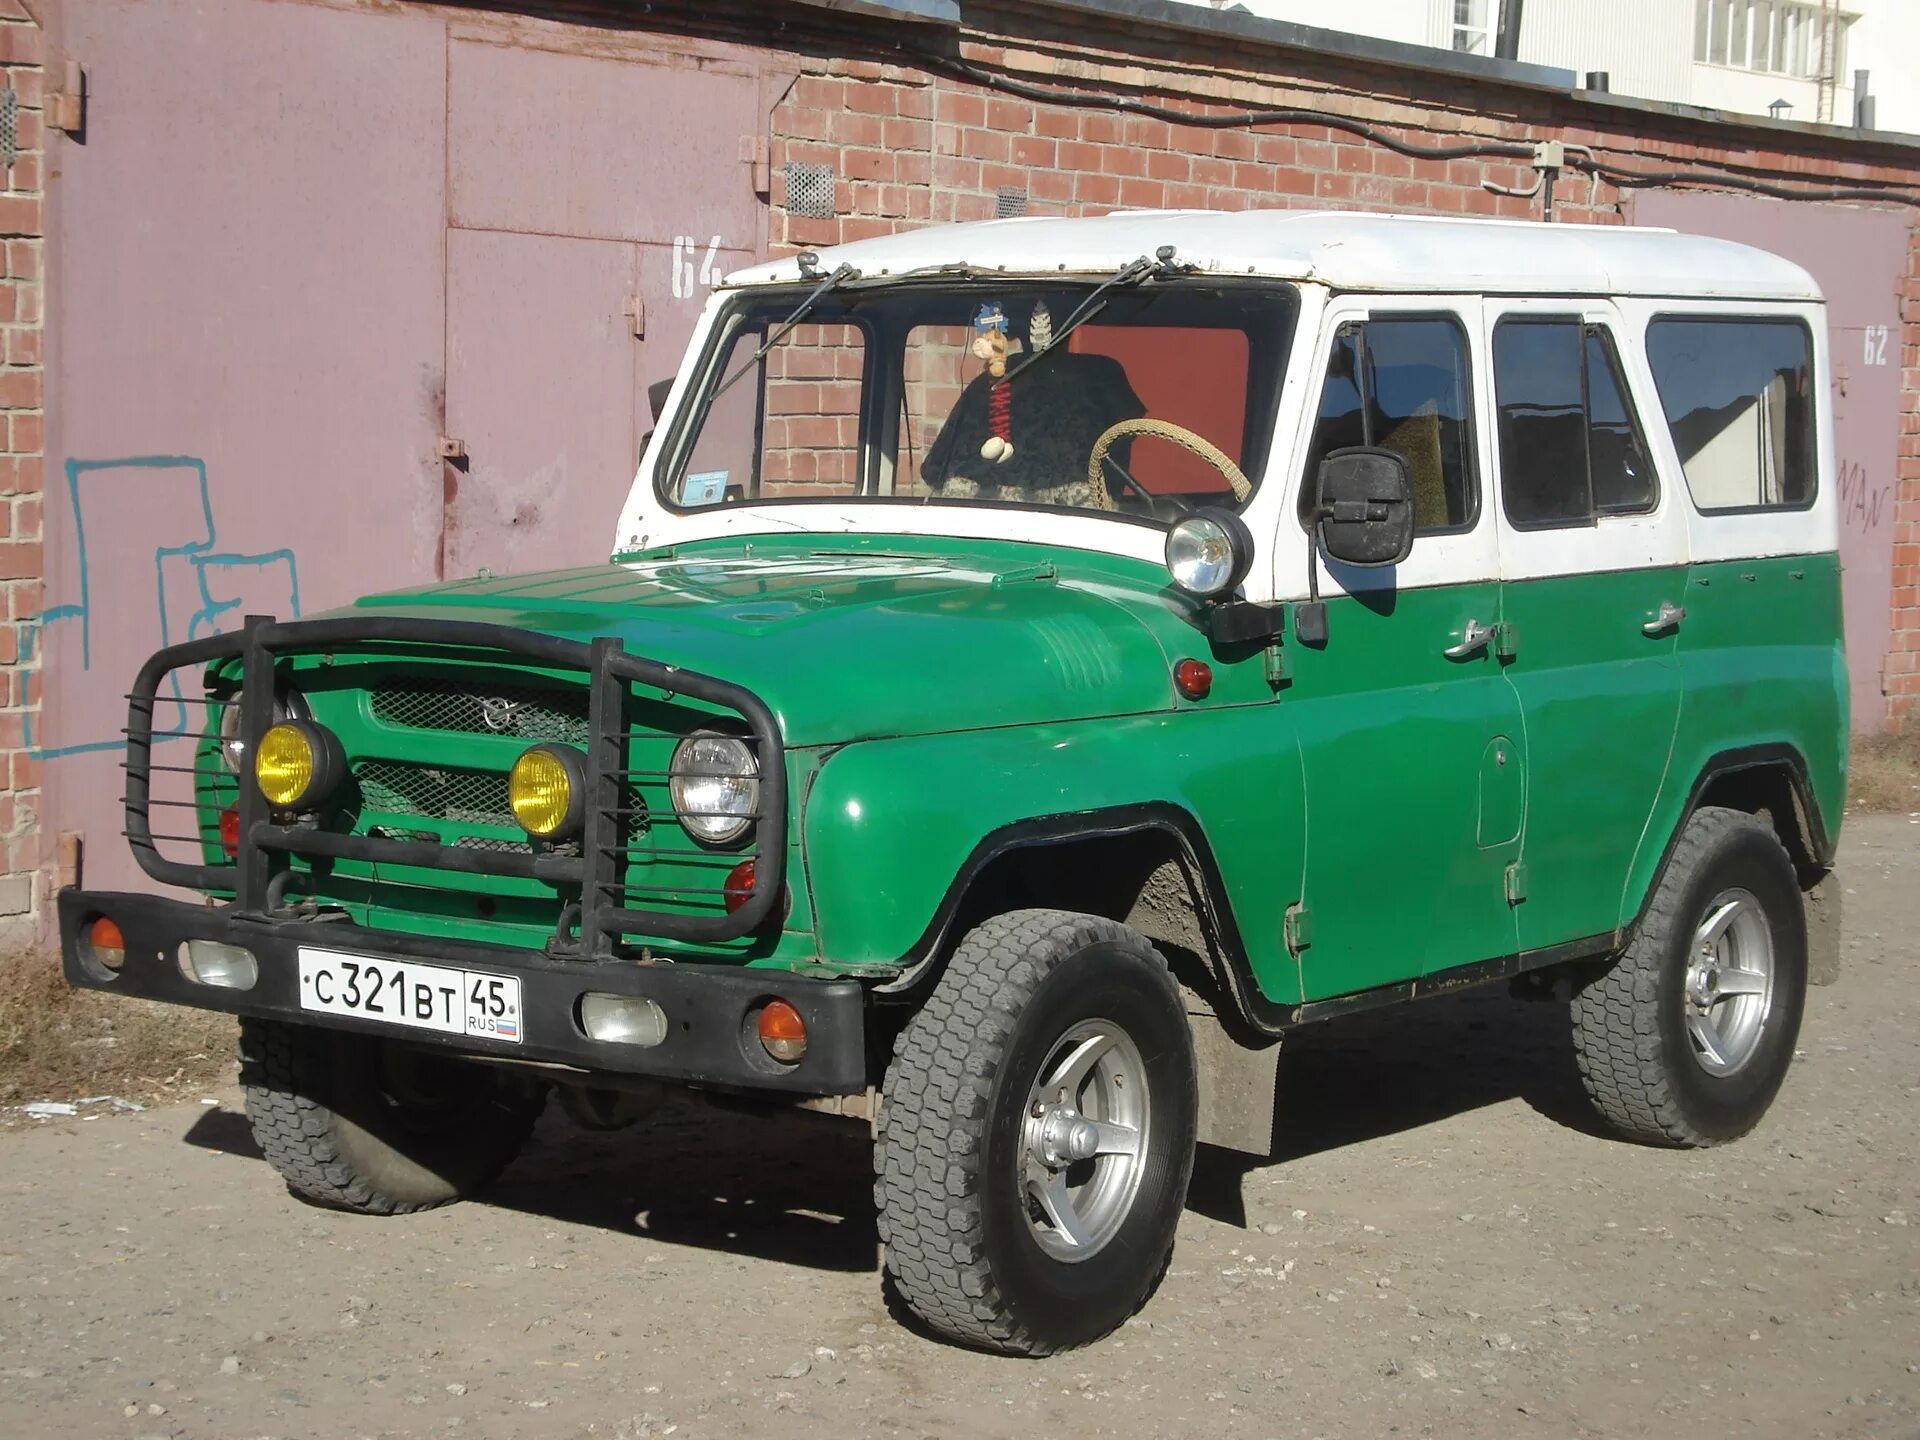 Уаз 469 отзывы. УАЗ 469 зеленый. УАЗ 469 469. УАЗ 469 салатовый. УАЗ 469 двухцветный.